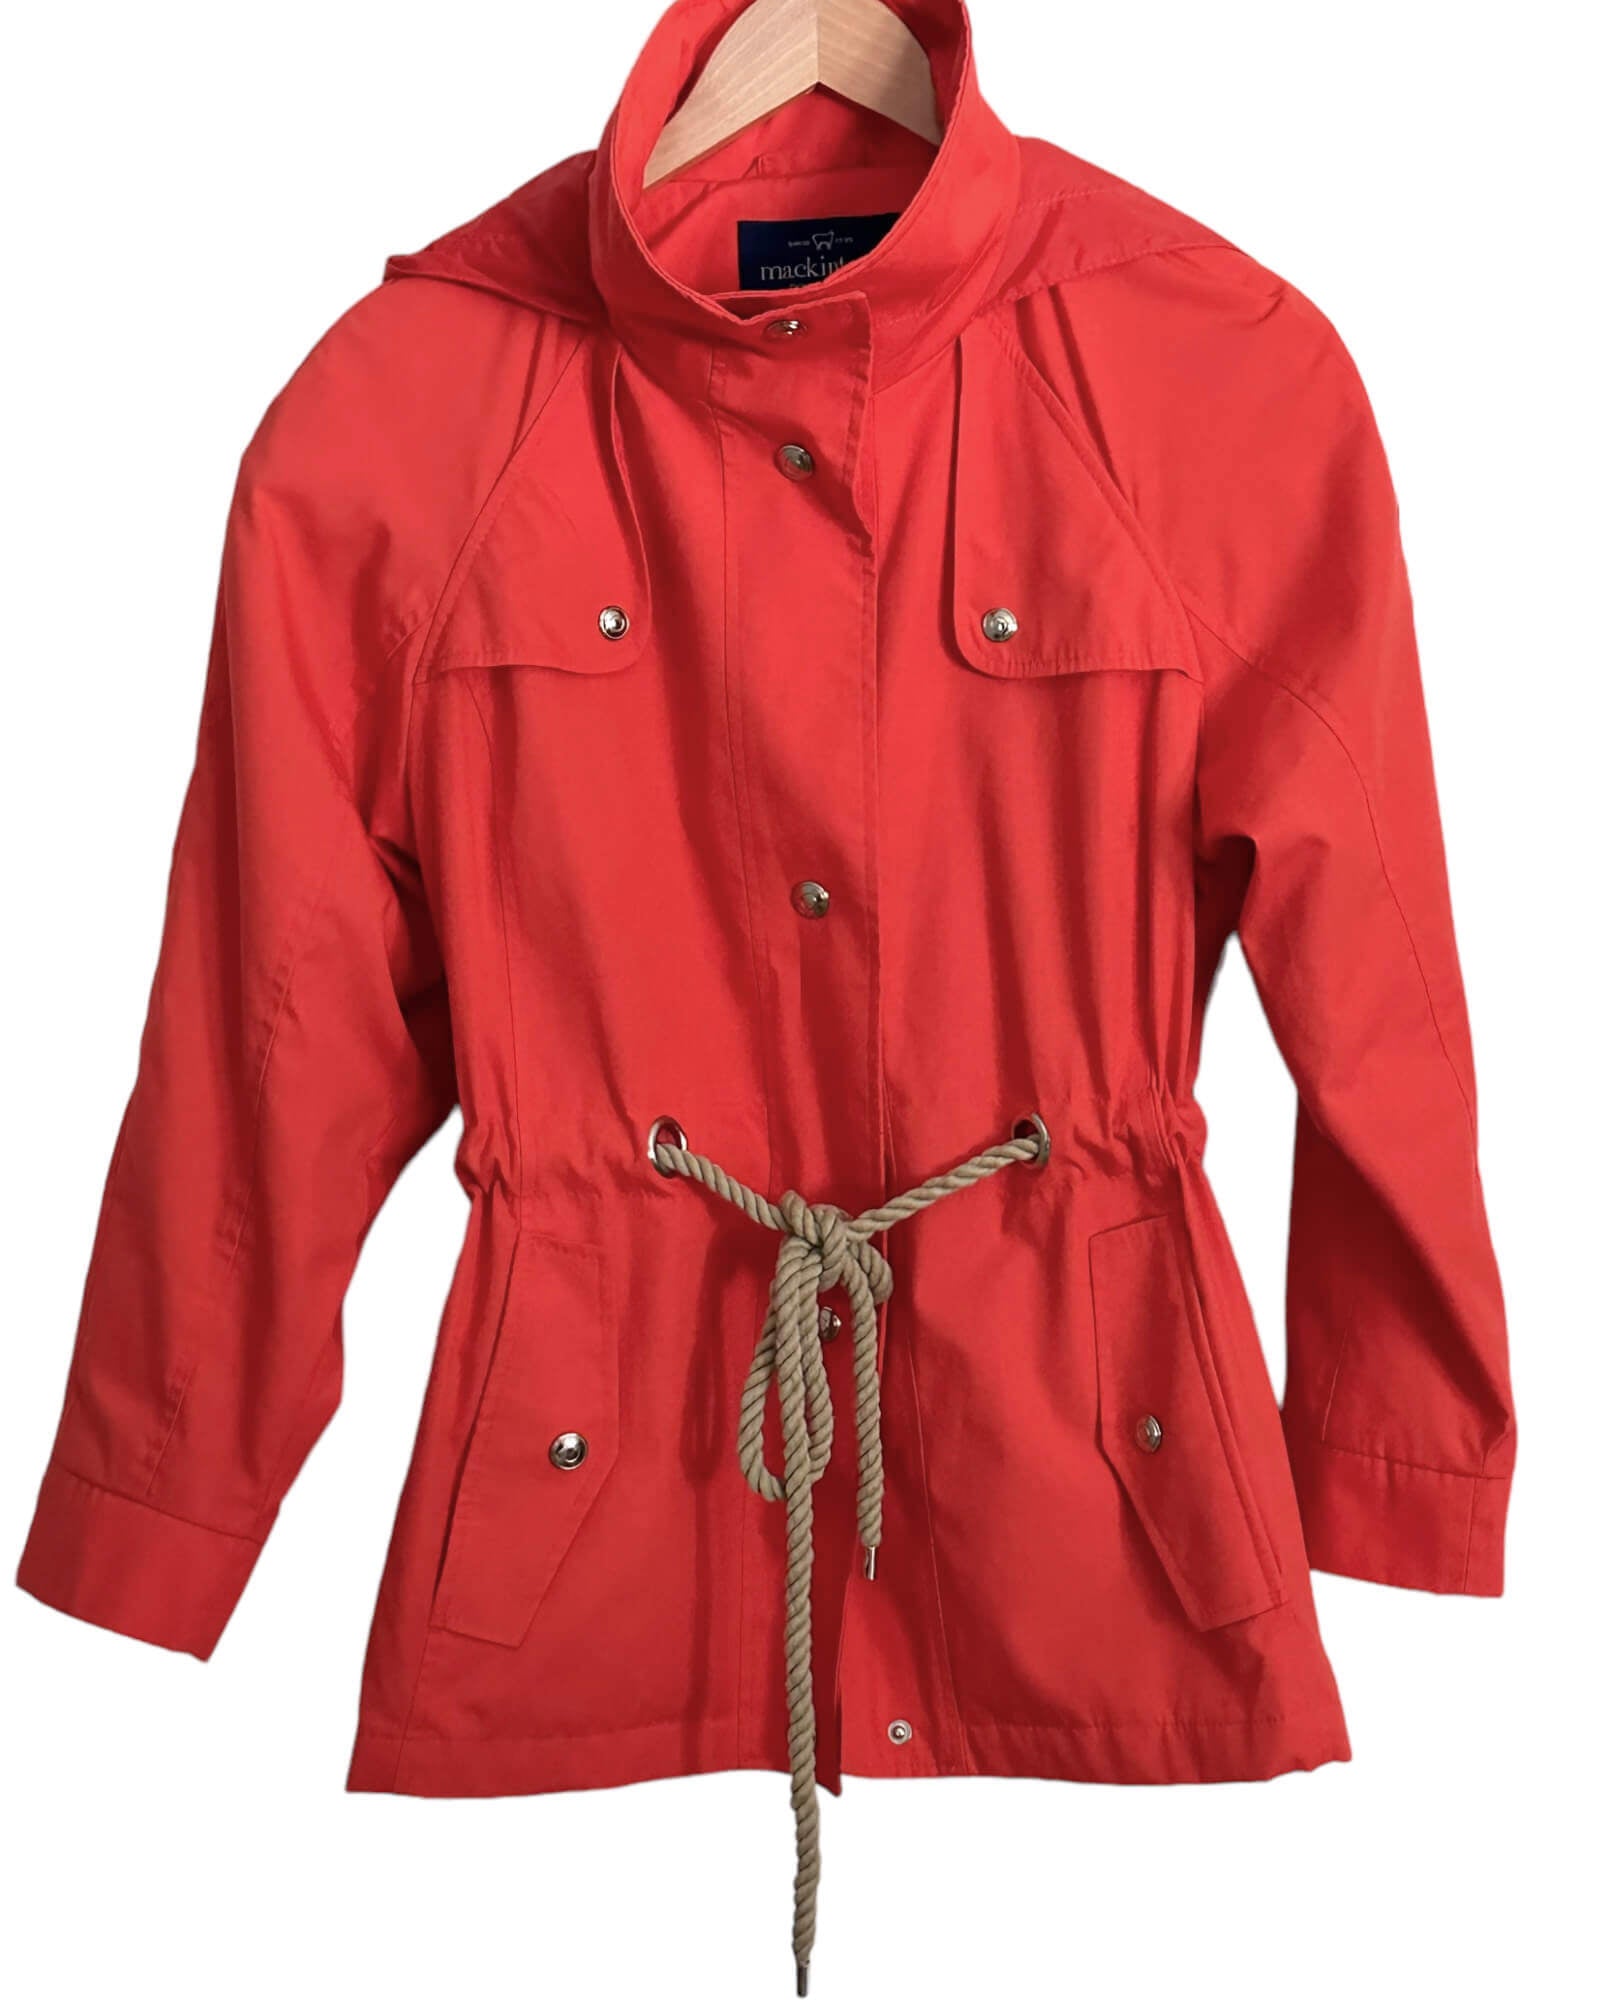 Warm Spring MACKINTOSH NEW ENGLAND orange corded rain jacket